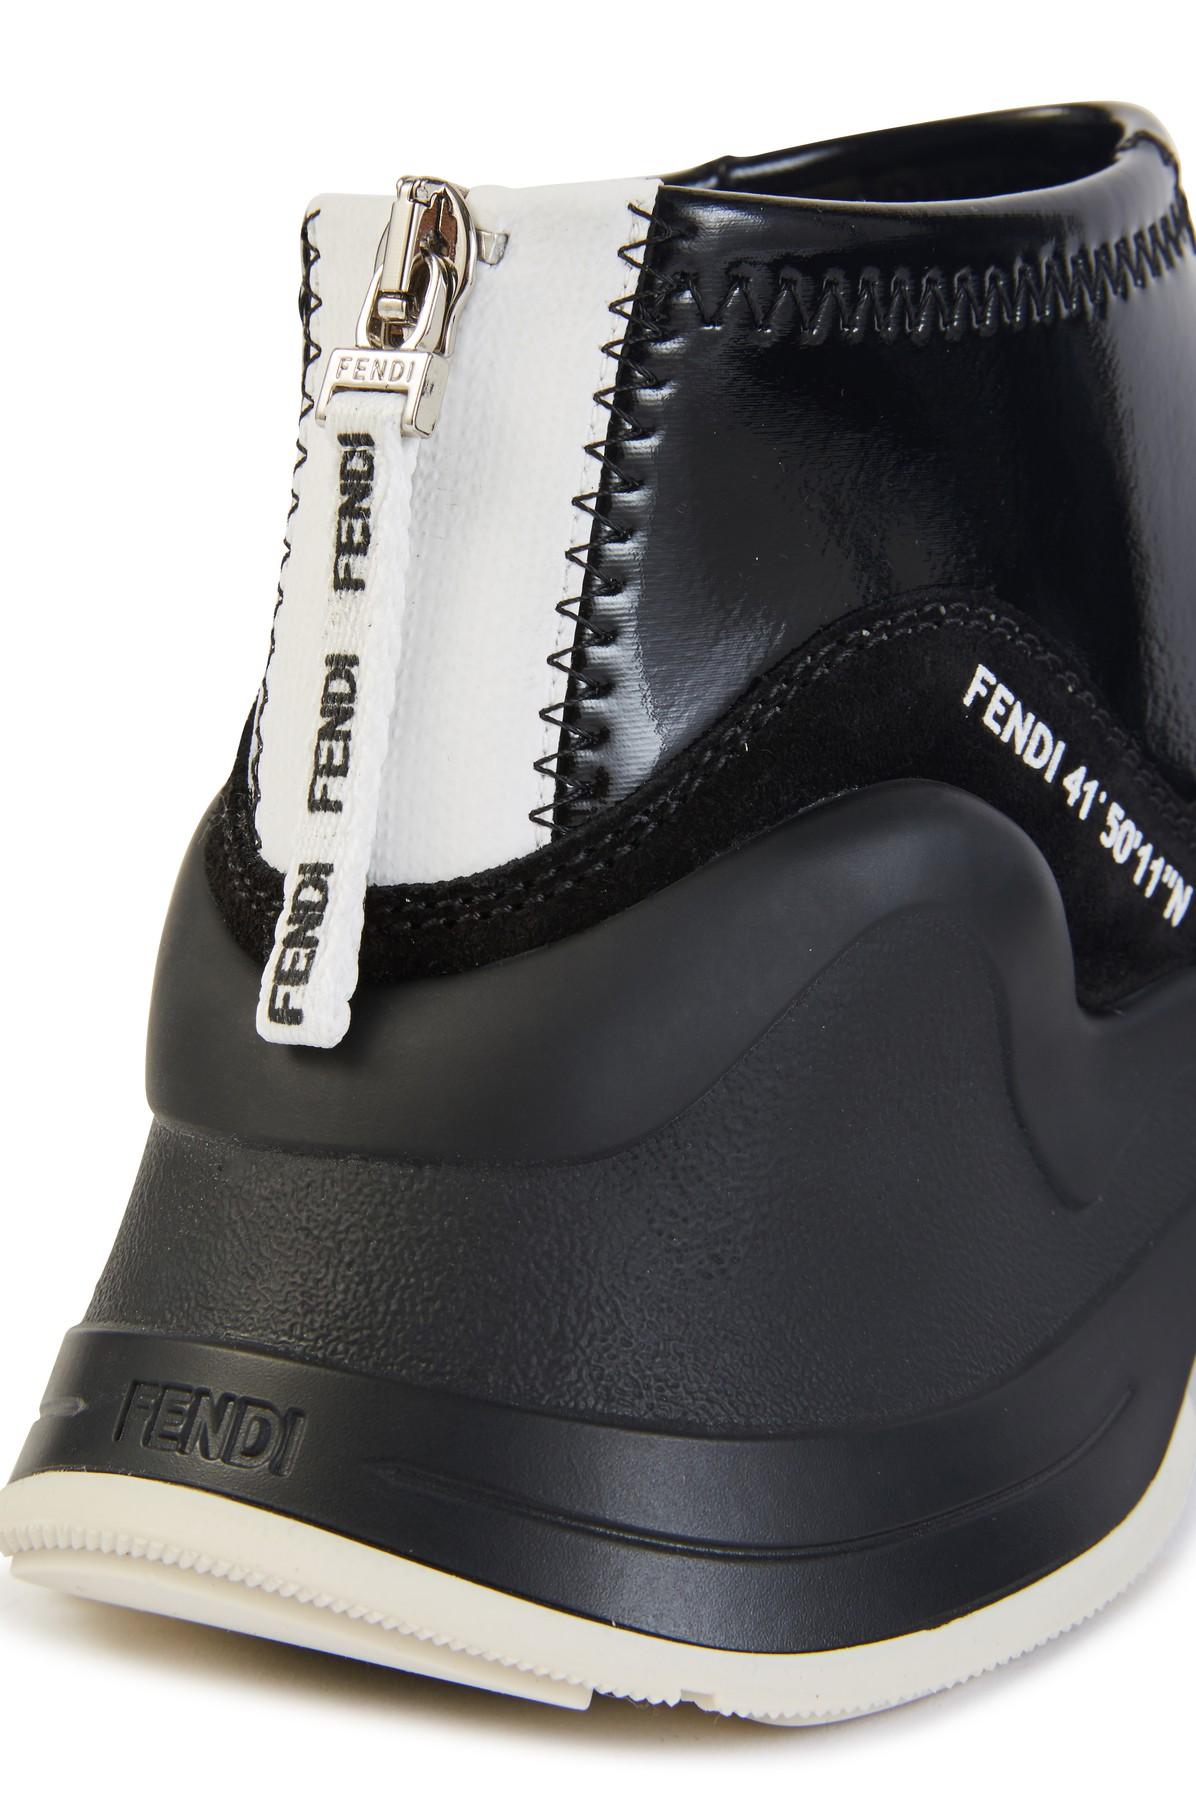 Fendi Ffluid Glossy Sneakers in White | Lyst